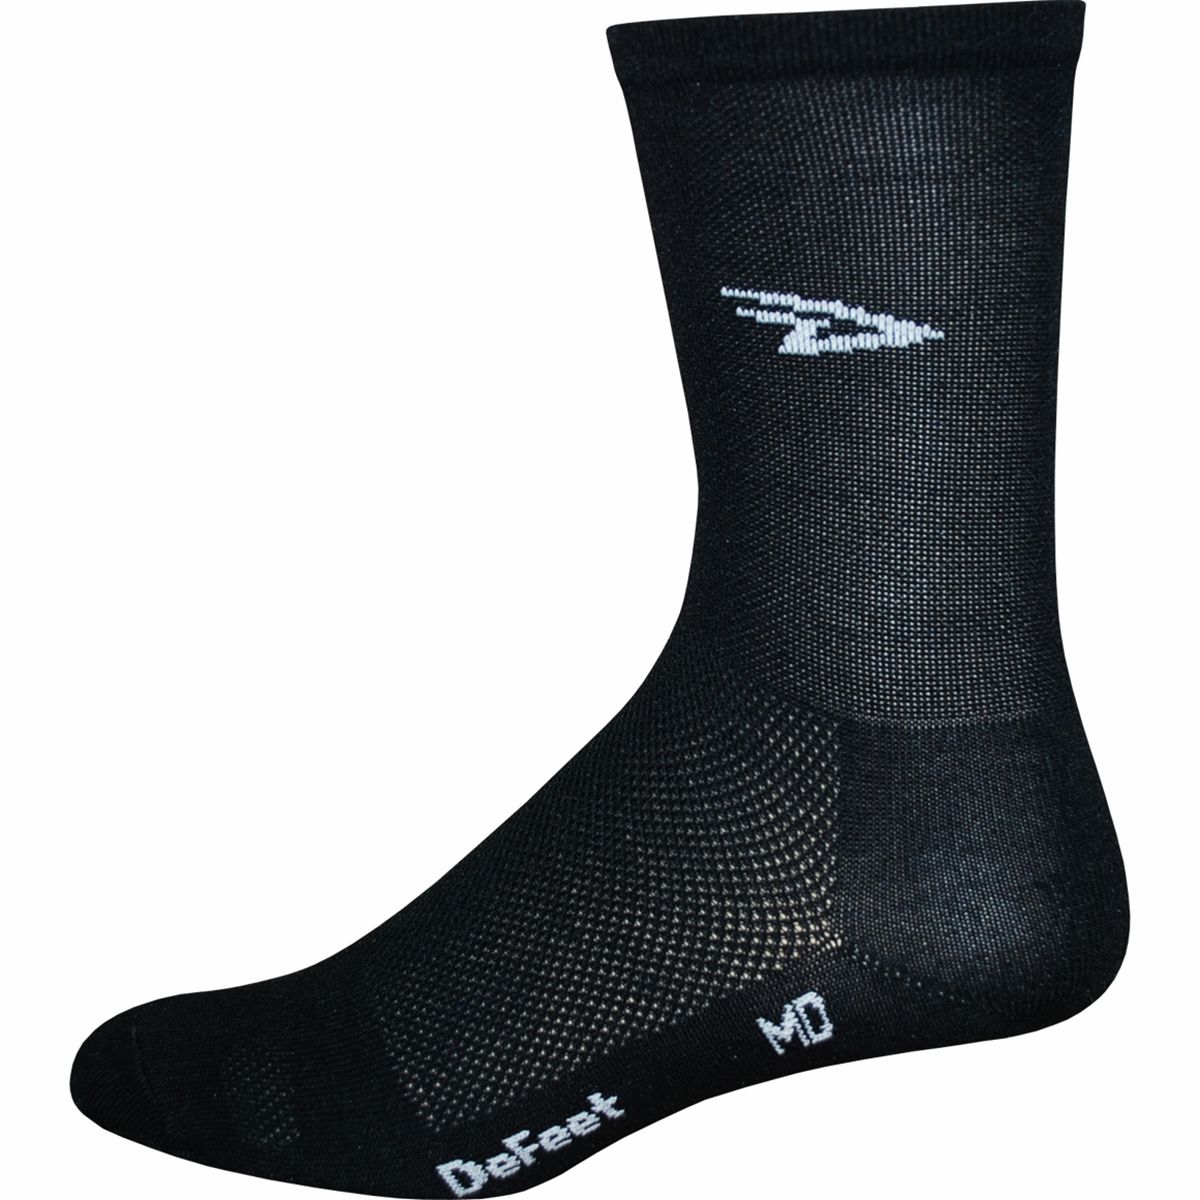 DeFeet Aireator 5in Sock D-Logo Black, M - Men's